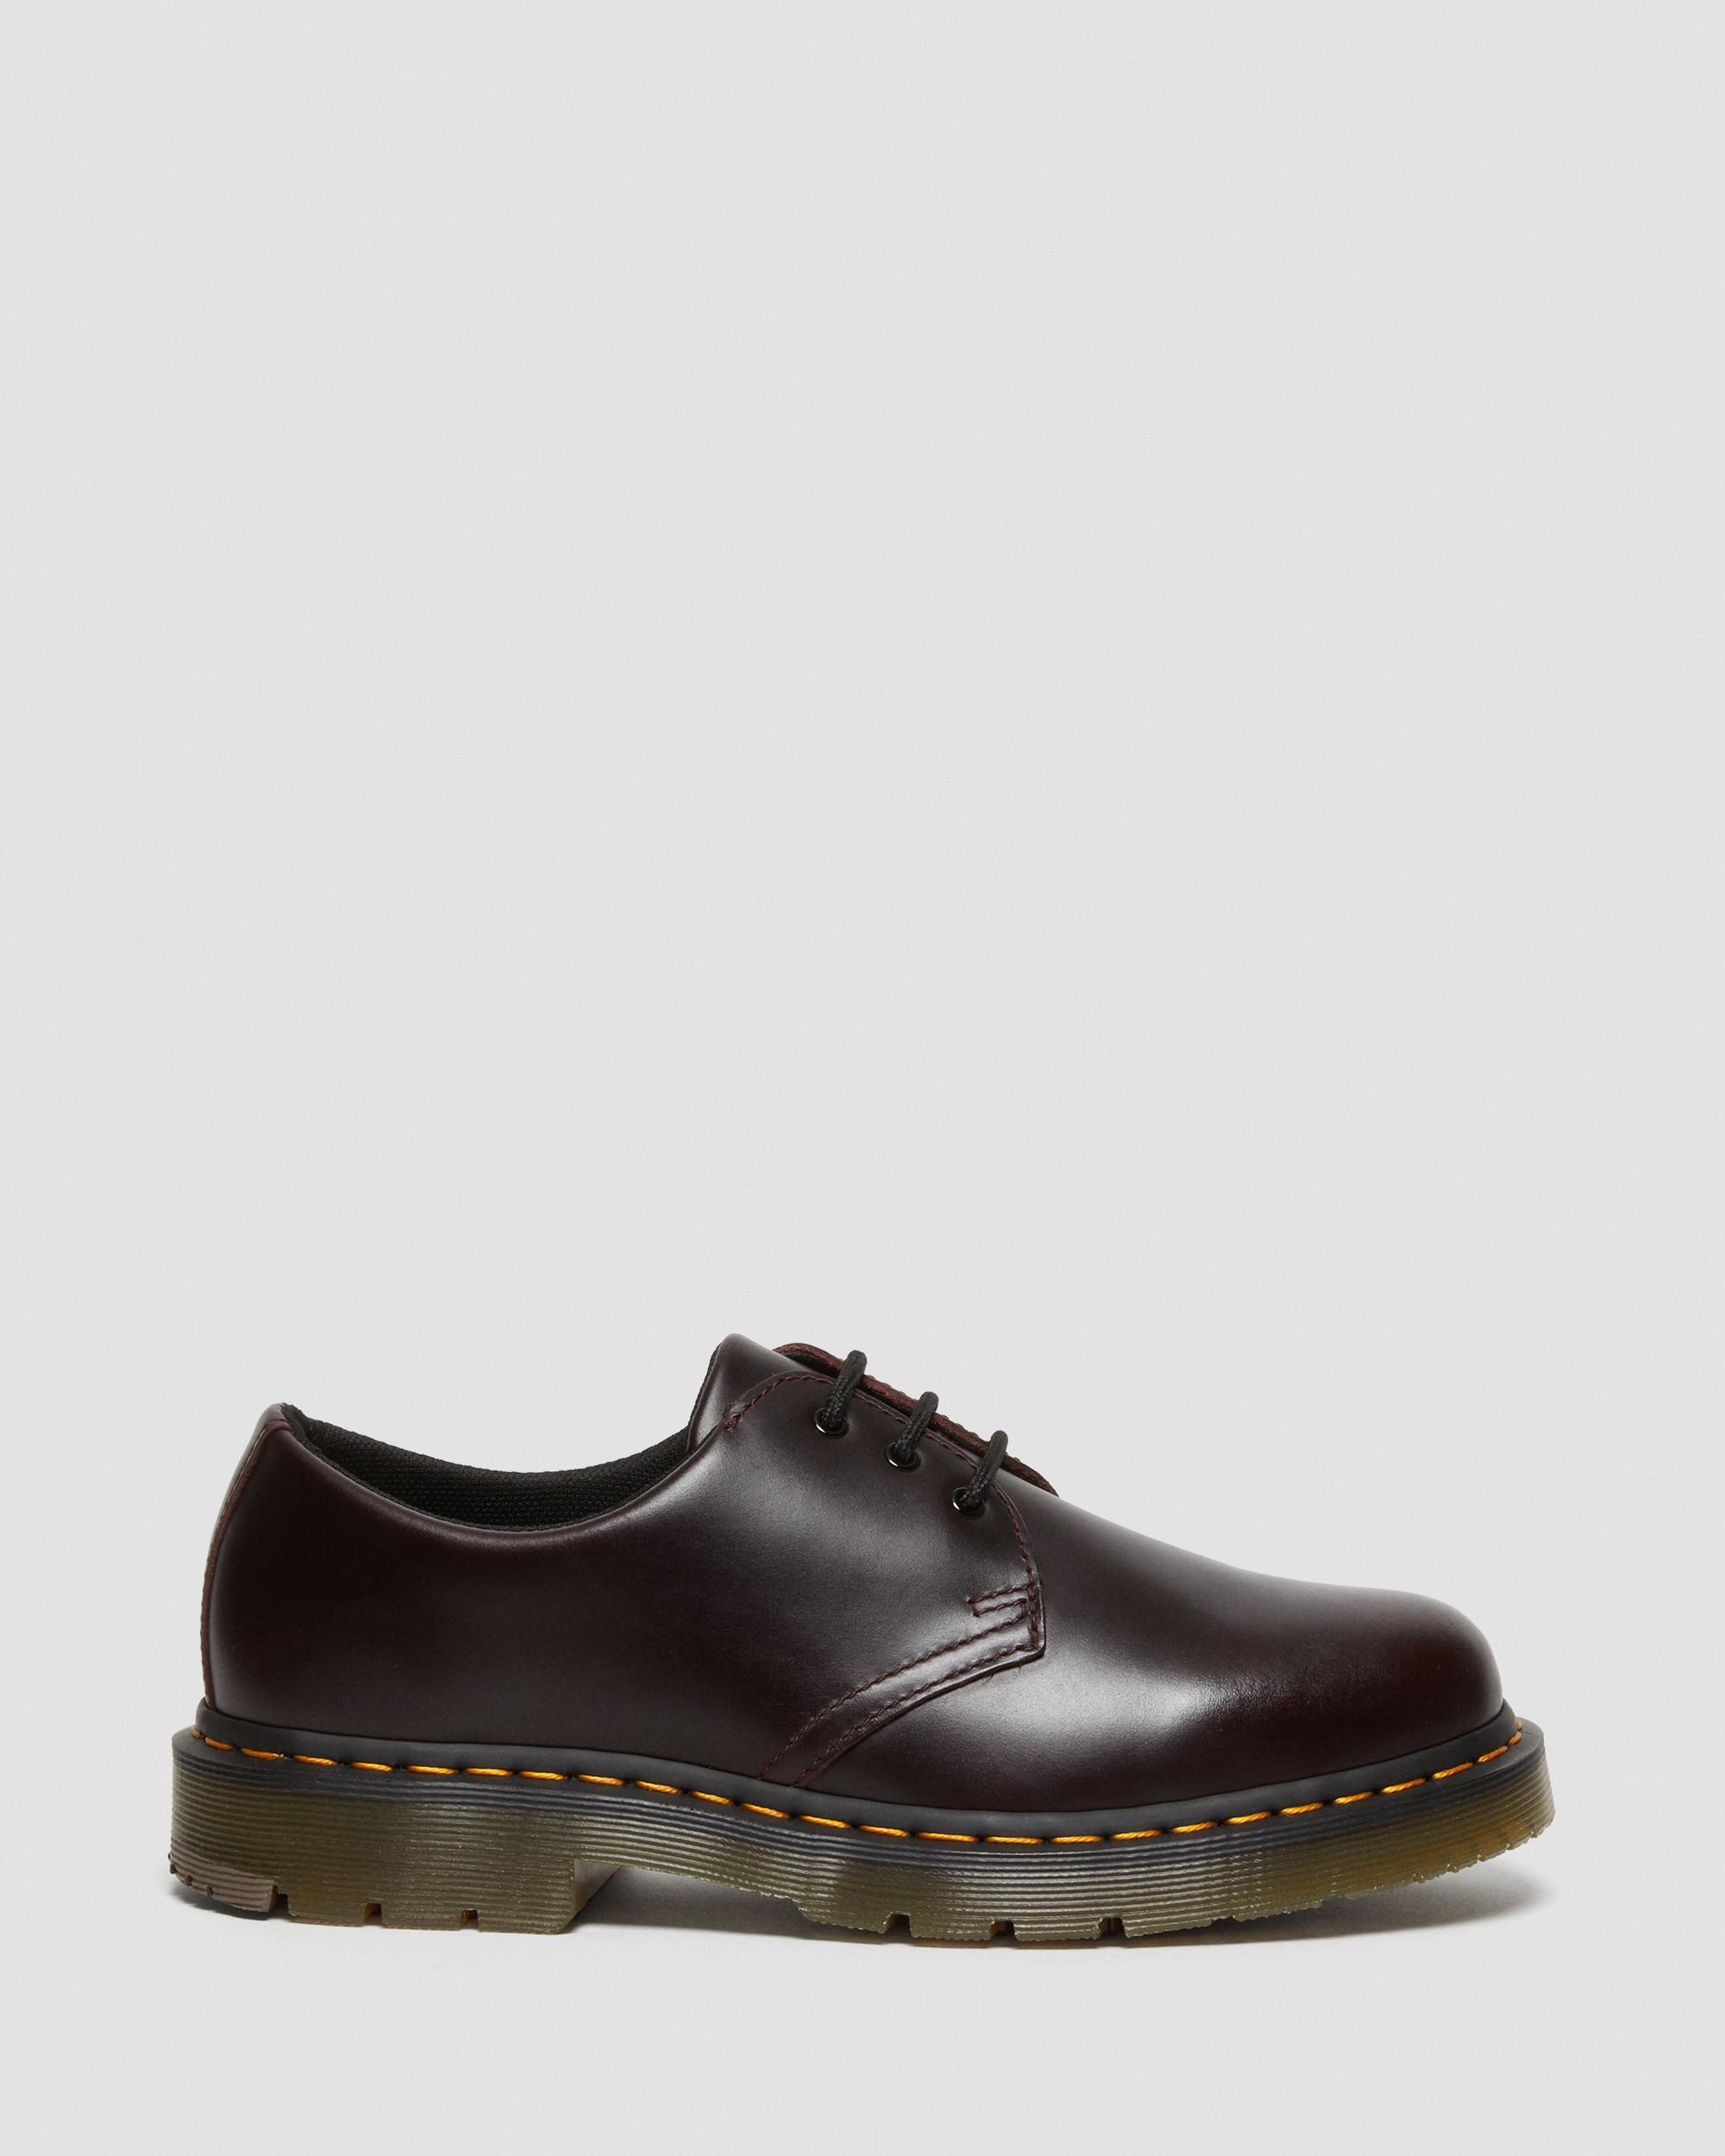 1461 Slip Resistant Leather Oxford Shoes, Oxblood | Dr. Martens